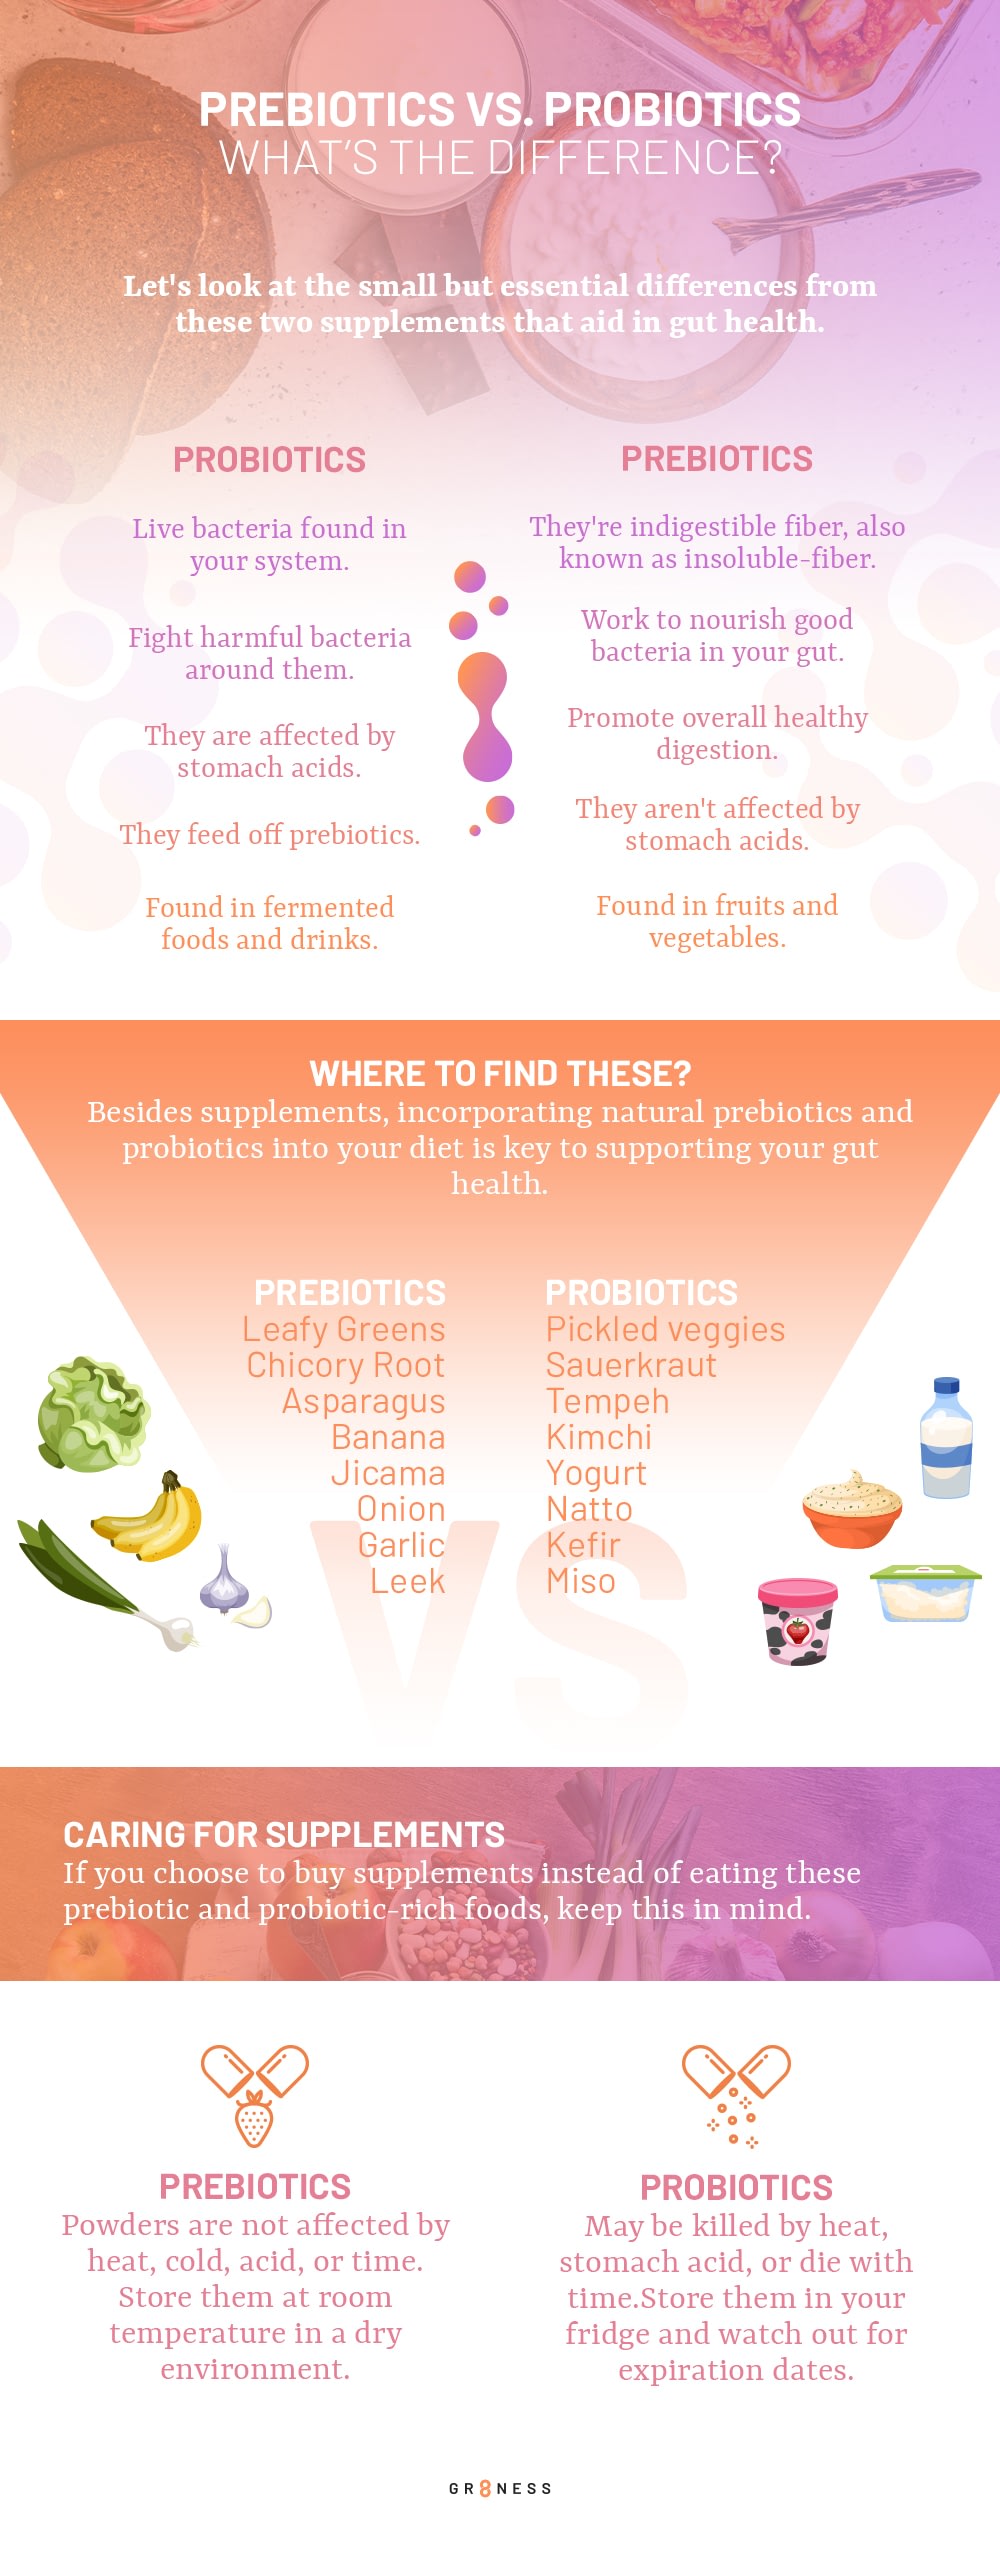 Prebiotics vs. Probiotics - What's the Difference?